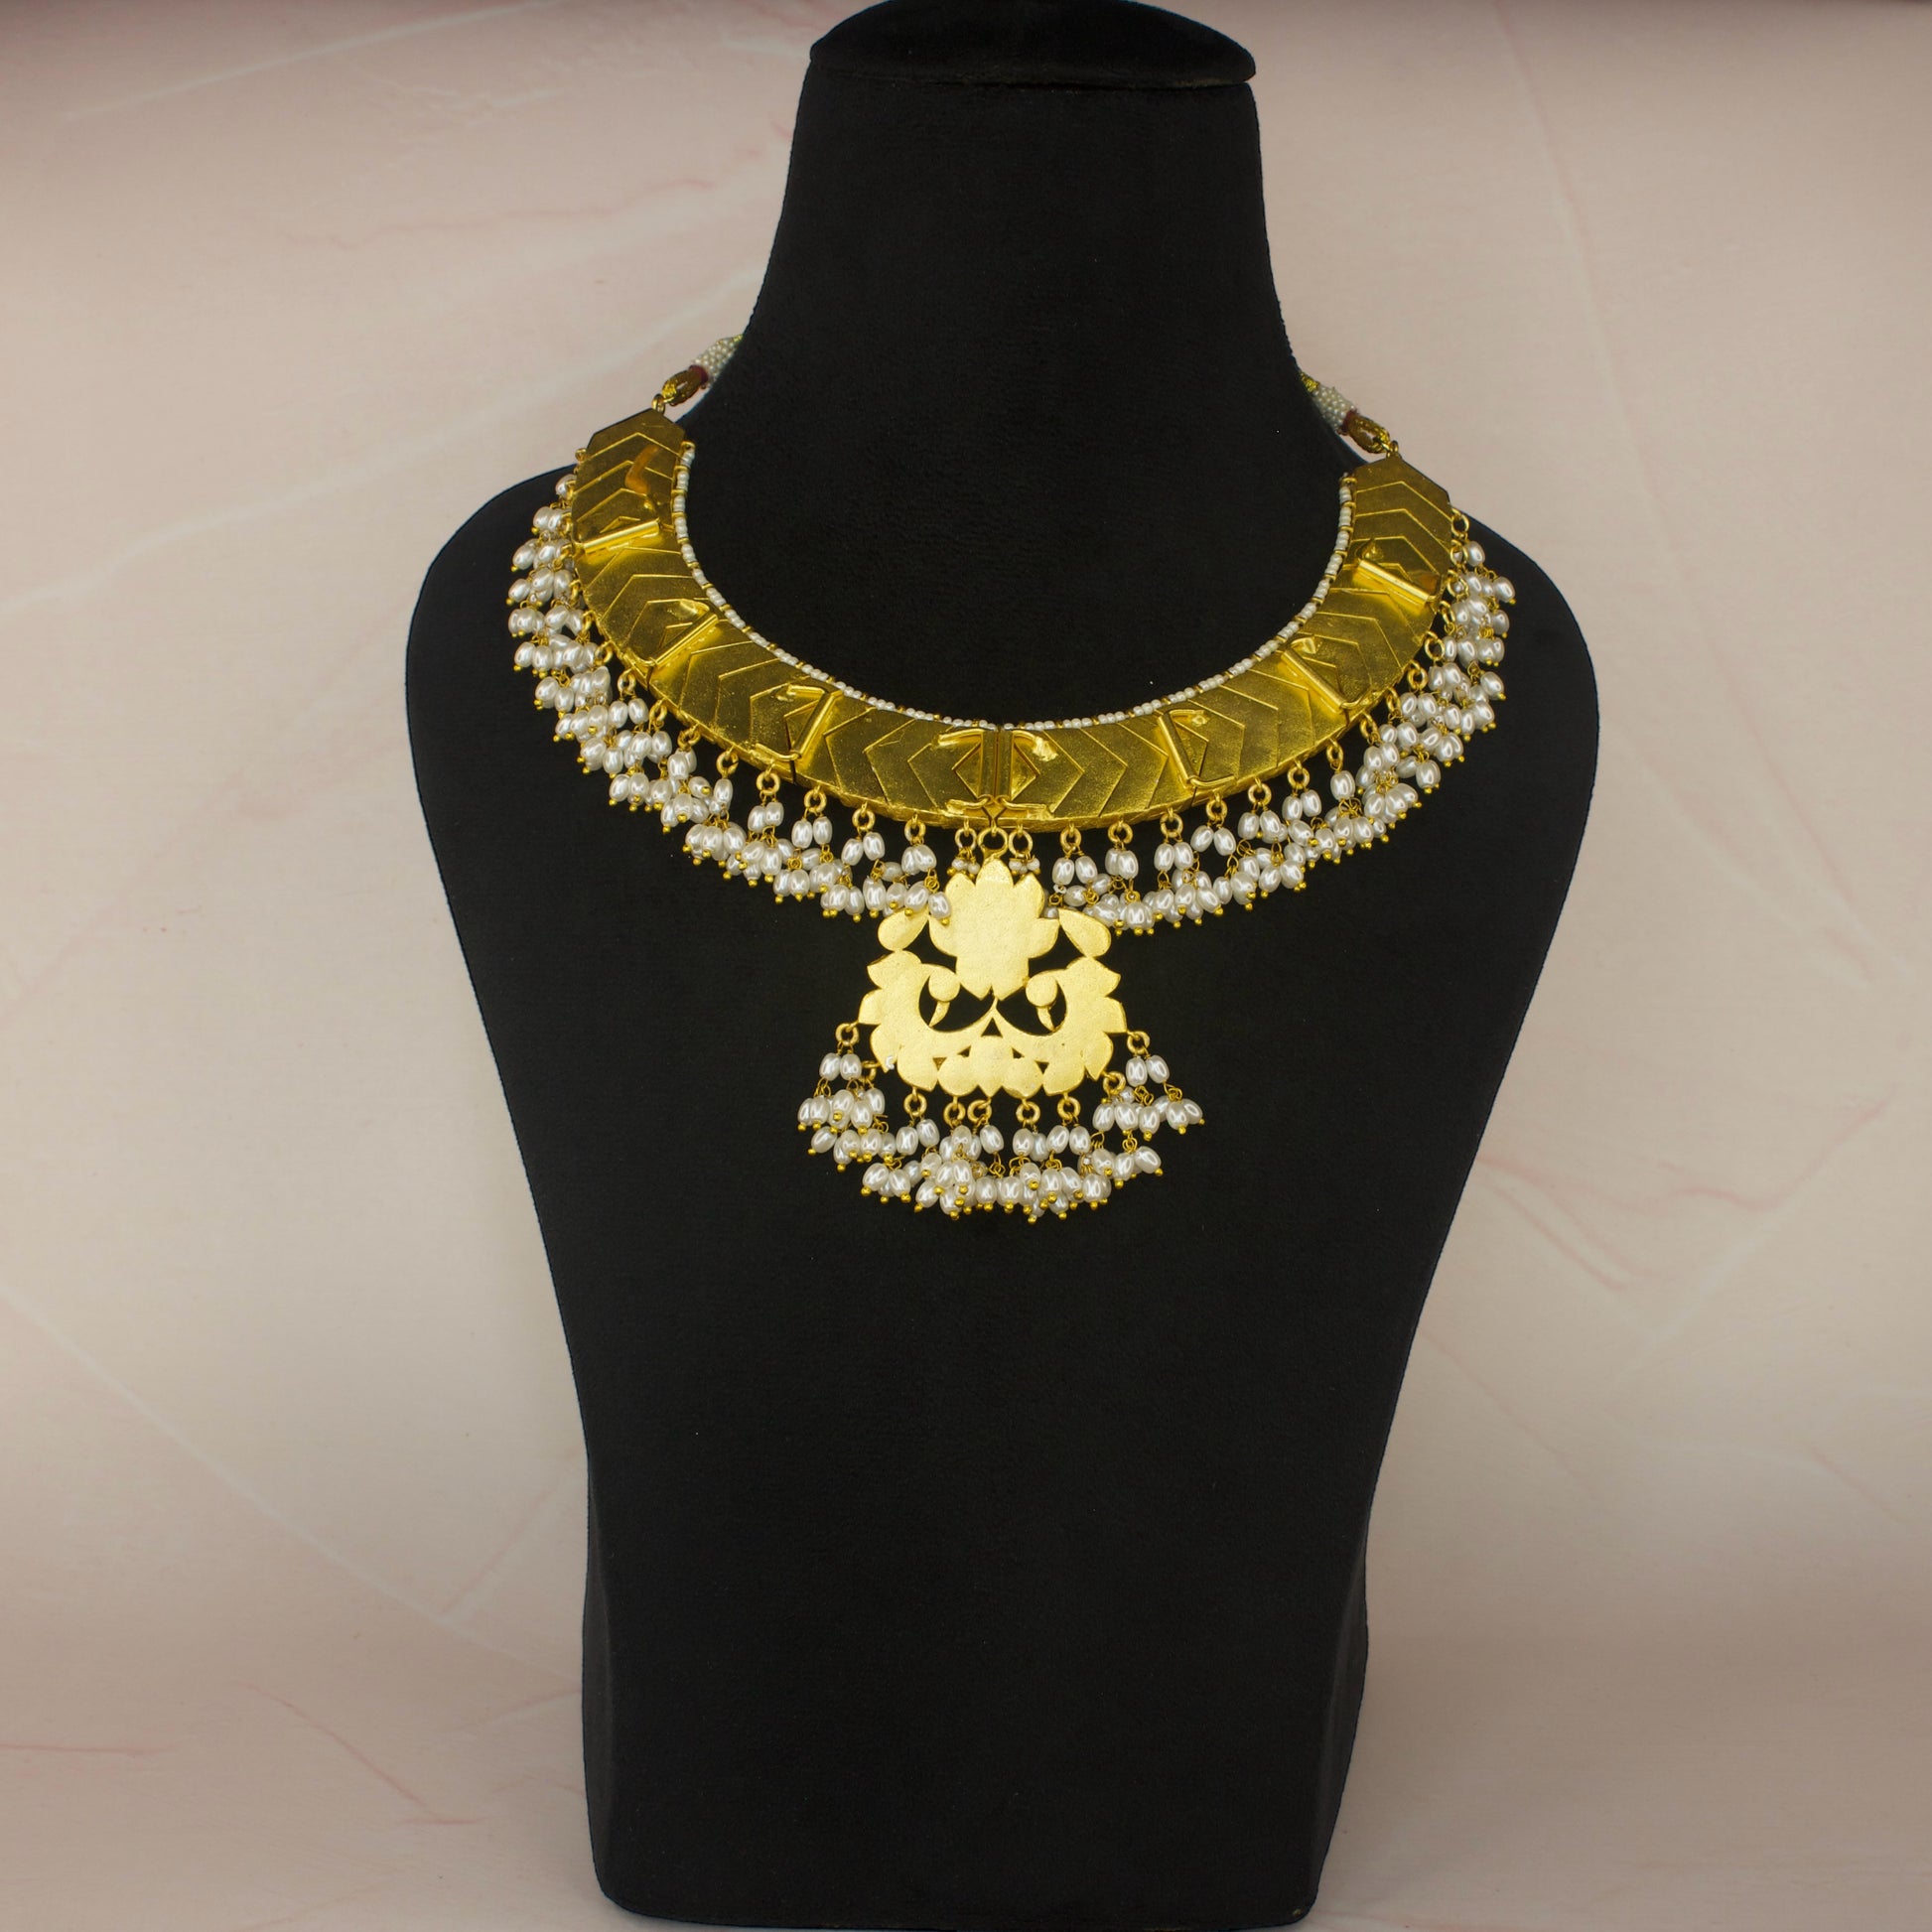 Guttapusalu Jadau Kundan Necklace with Rice Pearlswith 22k gold plating. This product belongs to Jadau Kundan Jewellery category